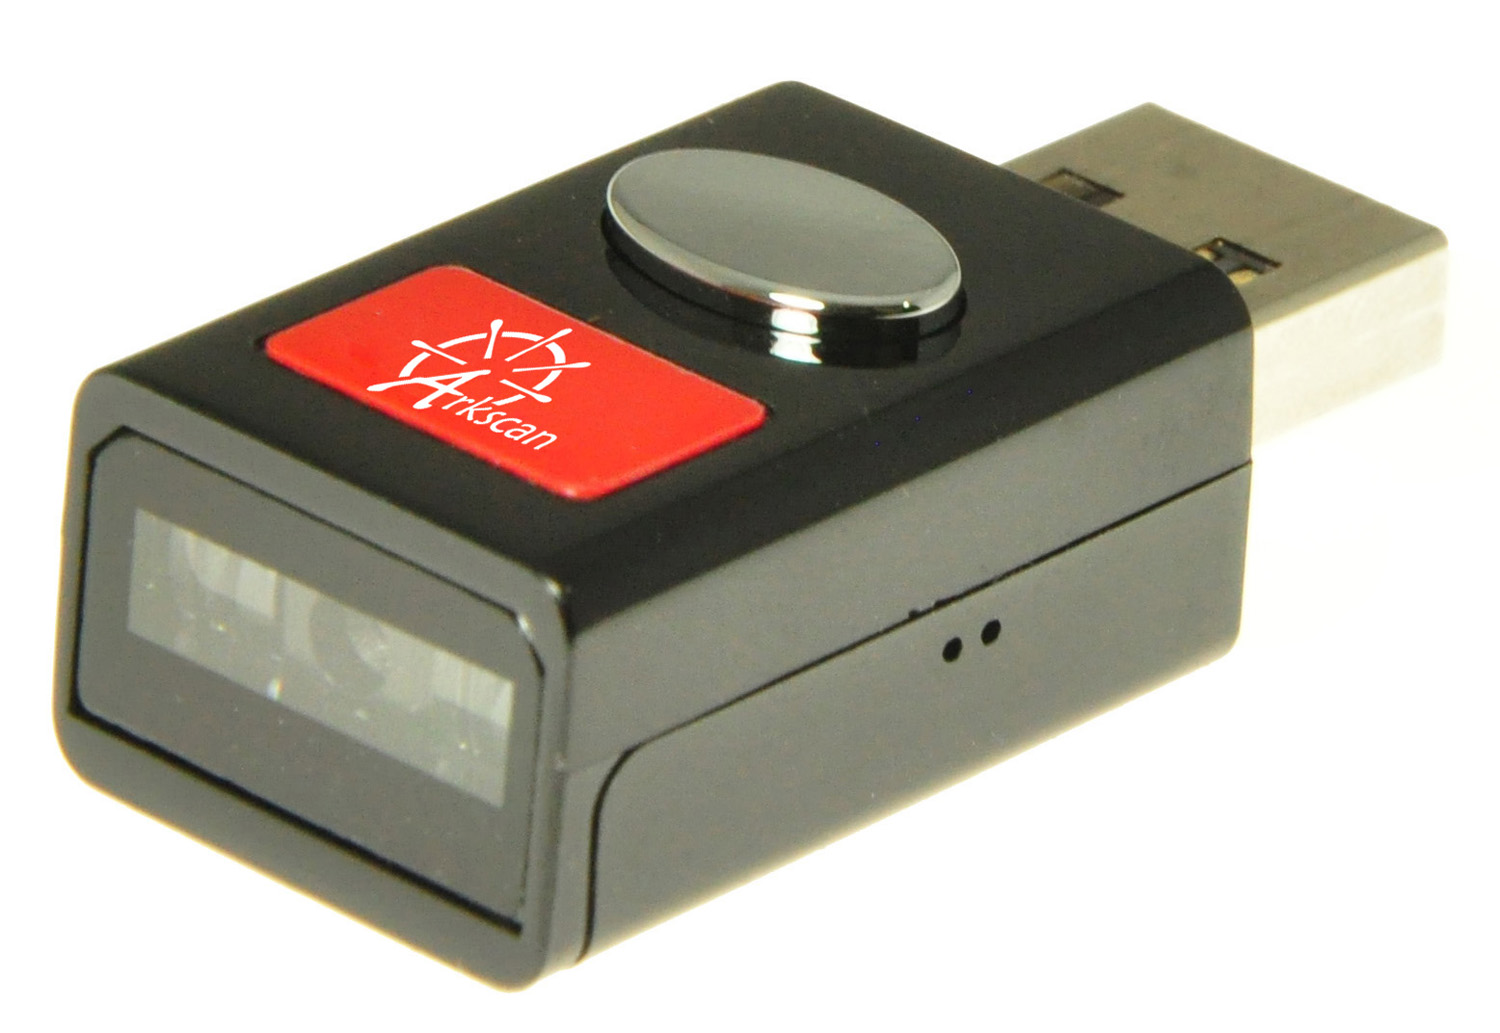 ES201 Mini USB - ARKSCAN, LLC